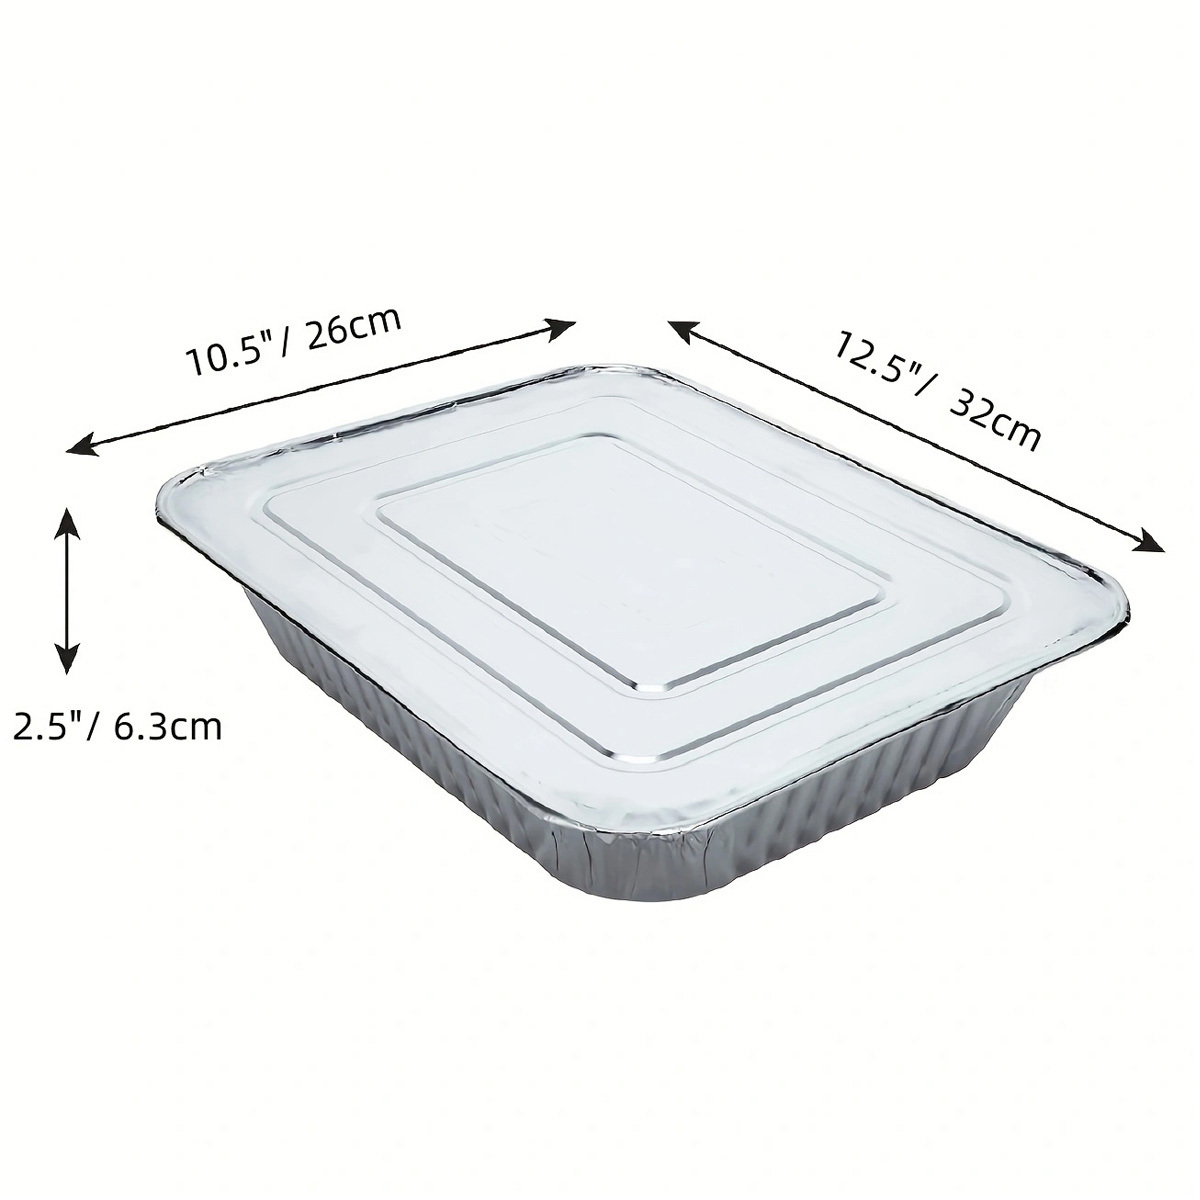 Aluminum Foil Pans With Lids X 13 ” The Aluminum Lid Is Sturdy And